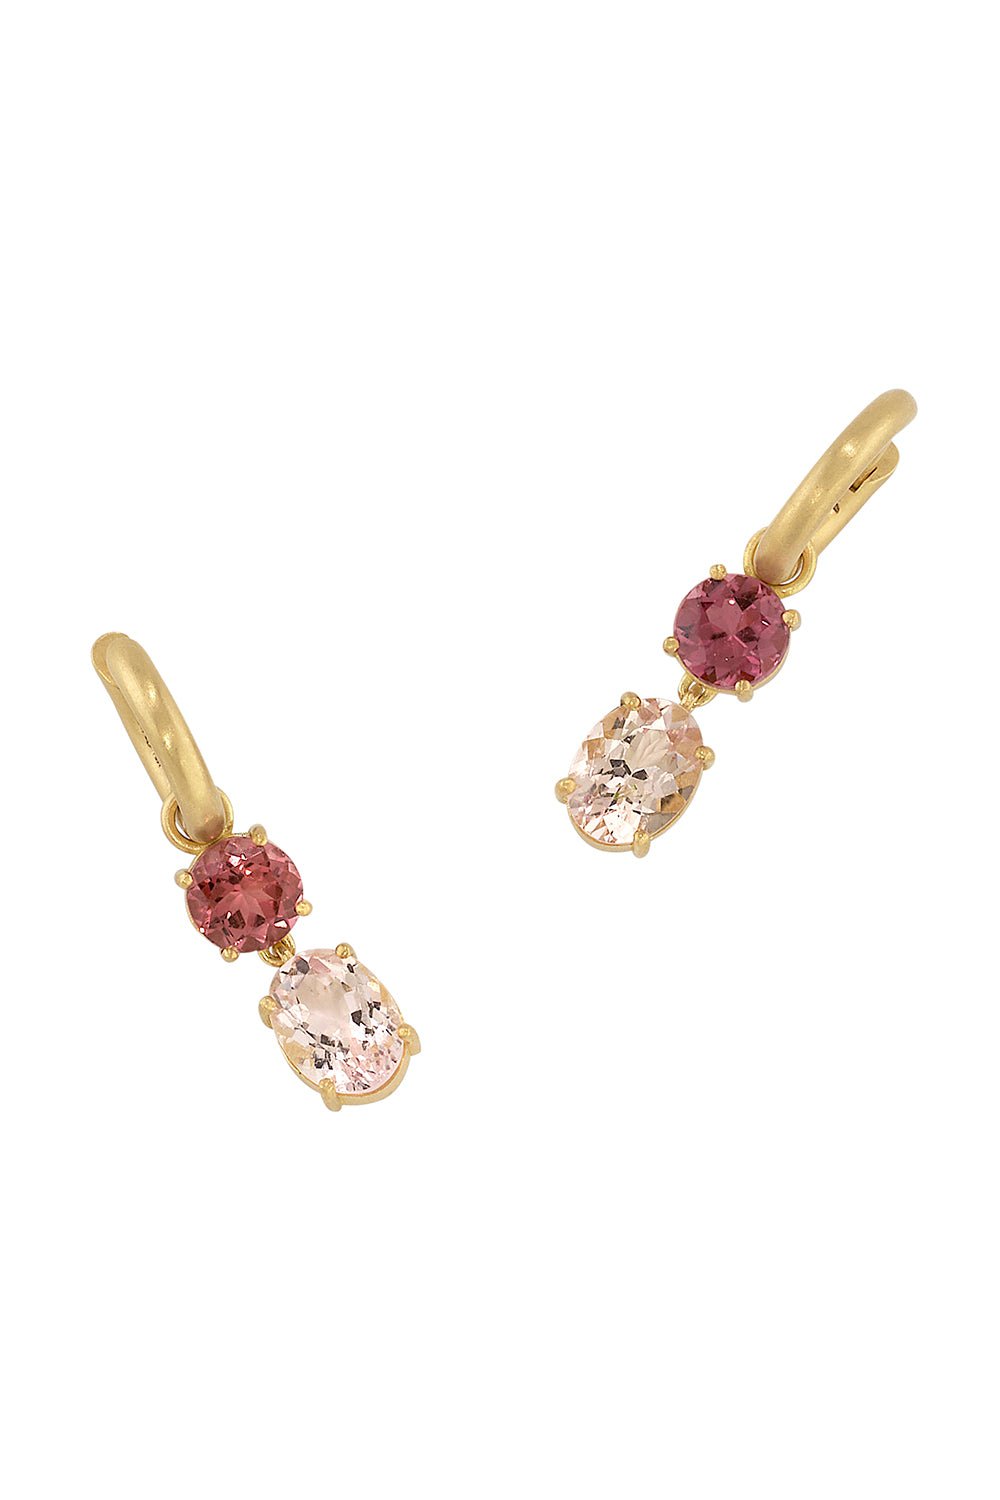 IRENE NEUWIRTH JEWELRY-Gemmy Gem Pink Tourmaline Huggie Earrings-YELLOW GOLD